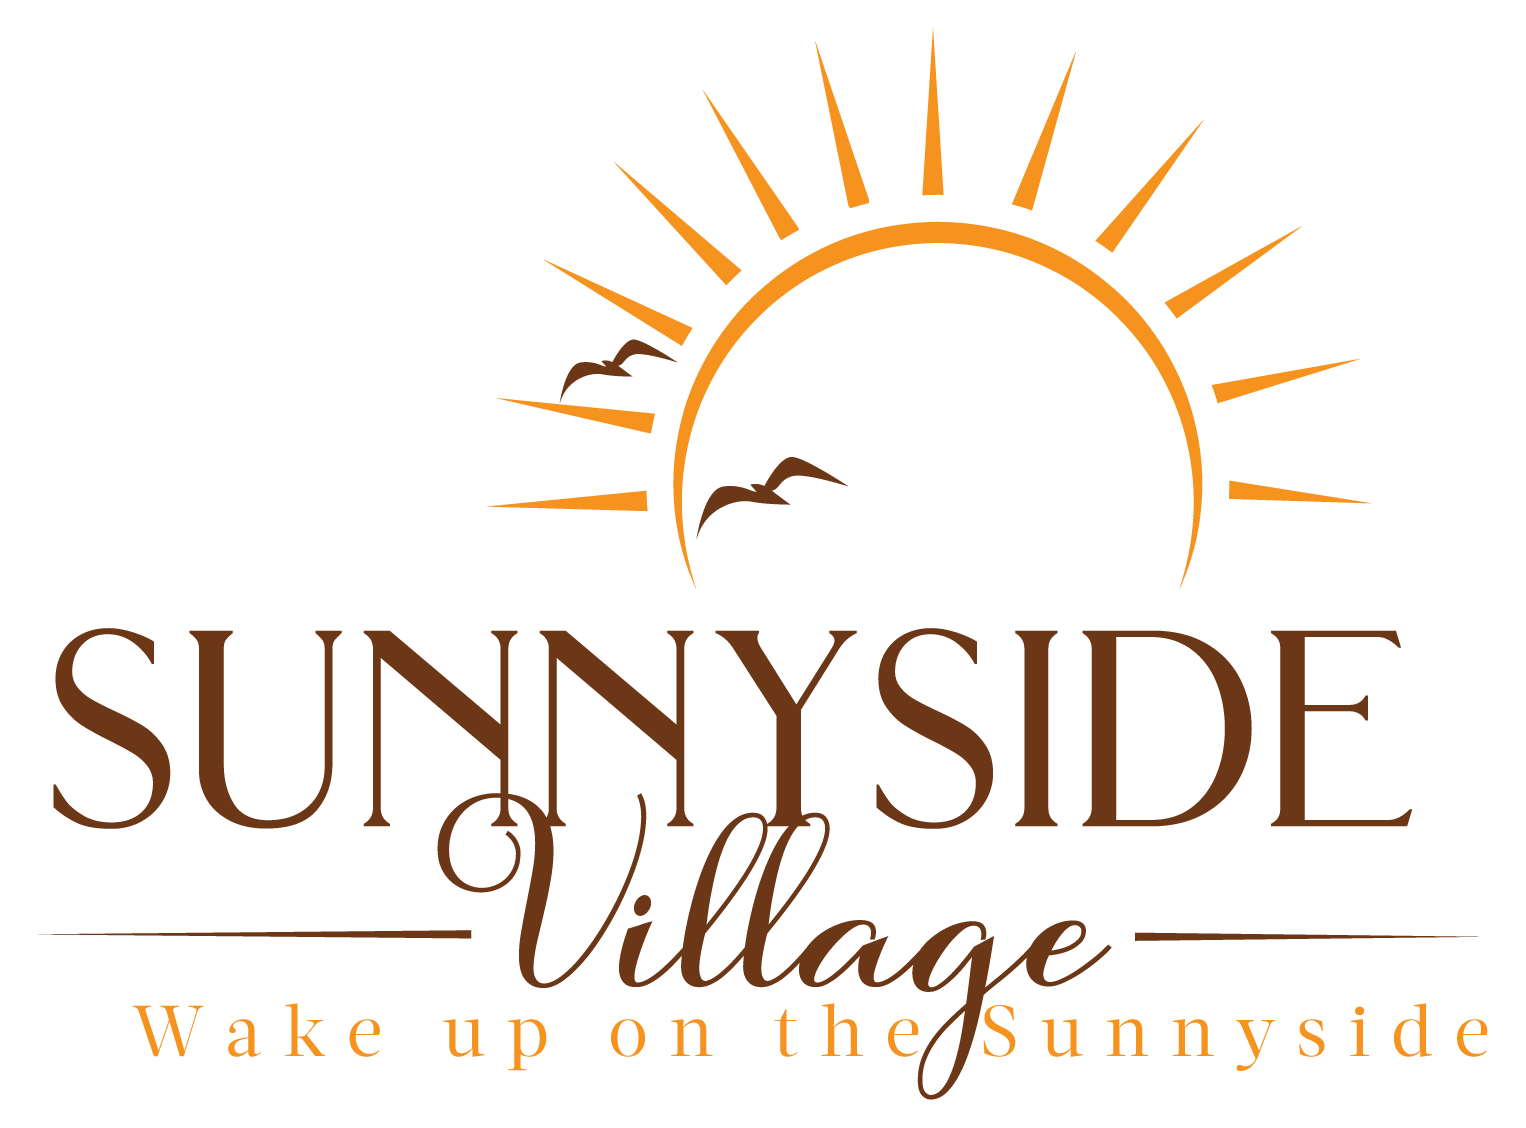 Sunnyside Village